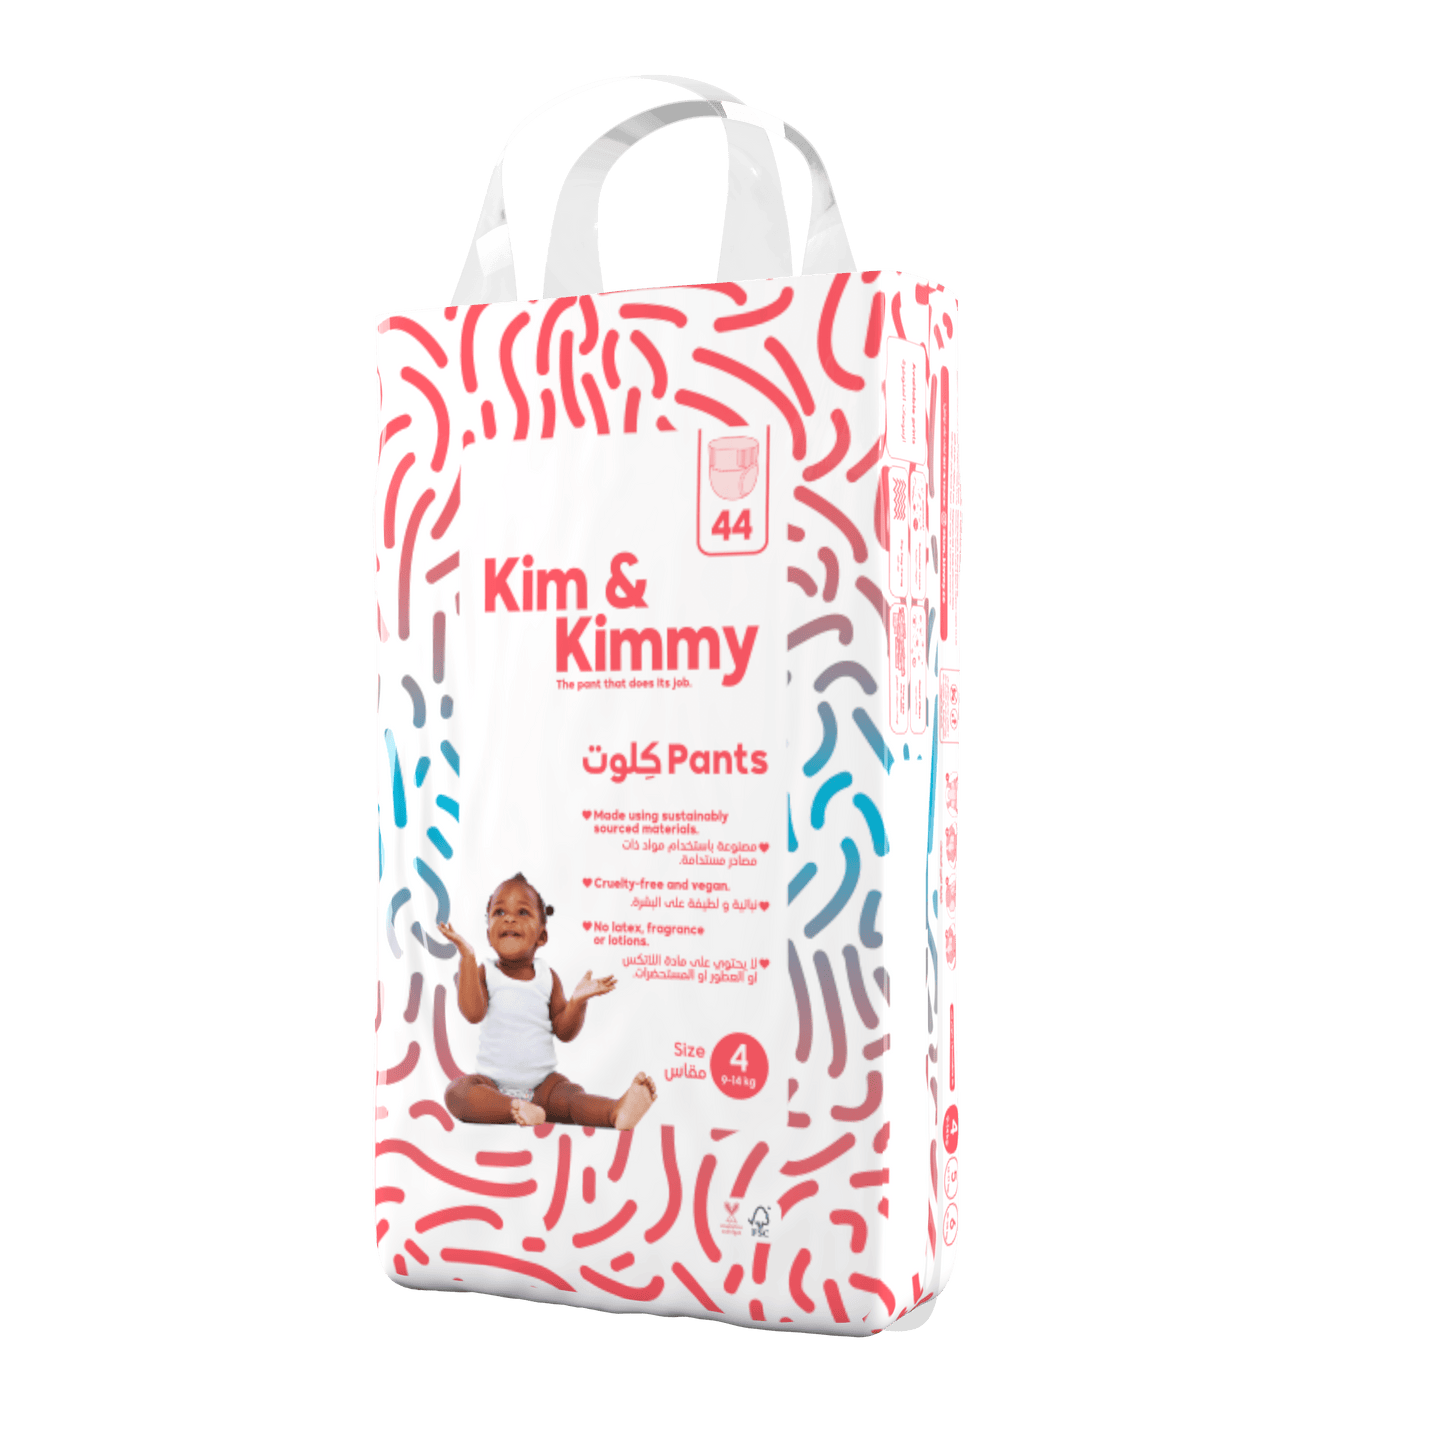 Kim & Kimmy - Size 4 Pants, 20 - 31 lbs, Qty 44